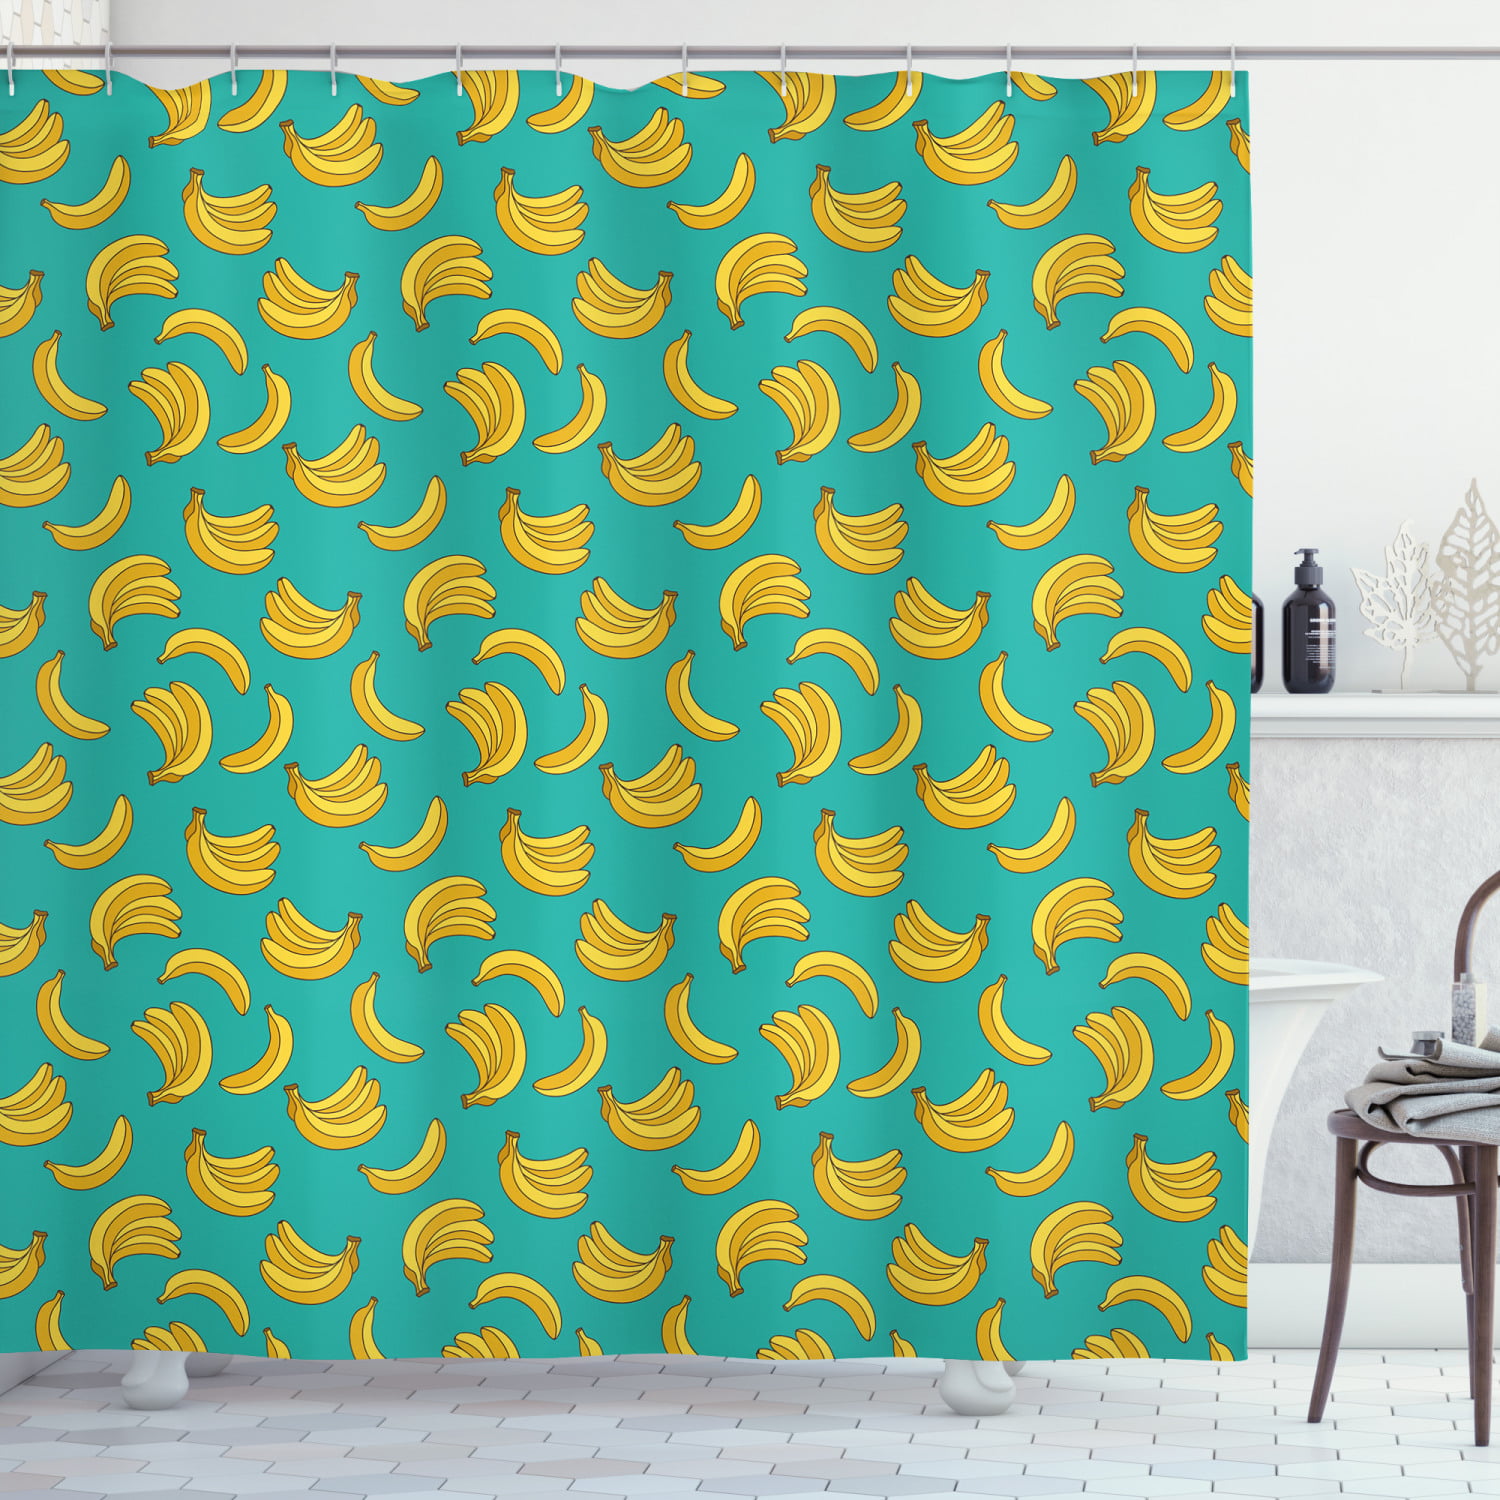 Tropical Fruit Banana Pattern Bathroom Shower Curtain Fabric 71*71inch 